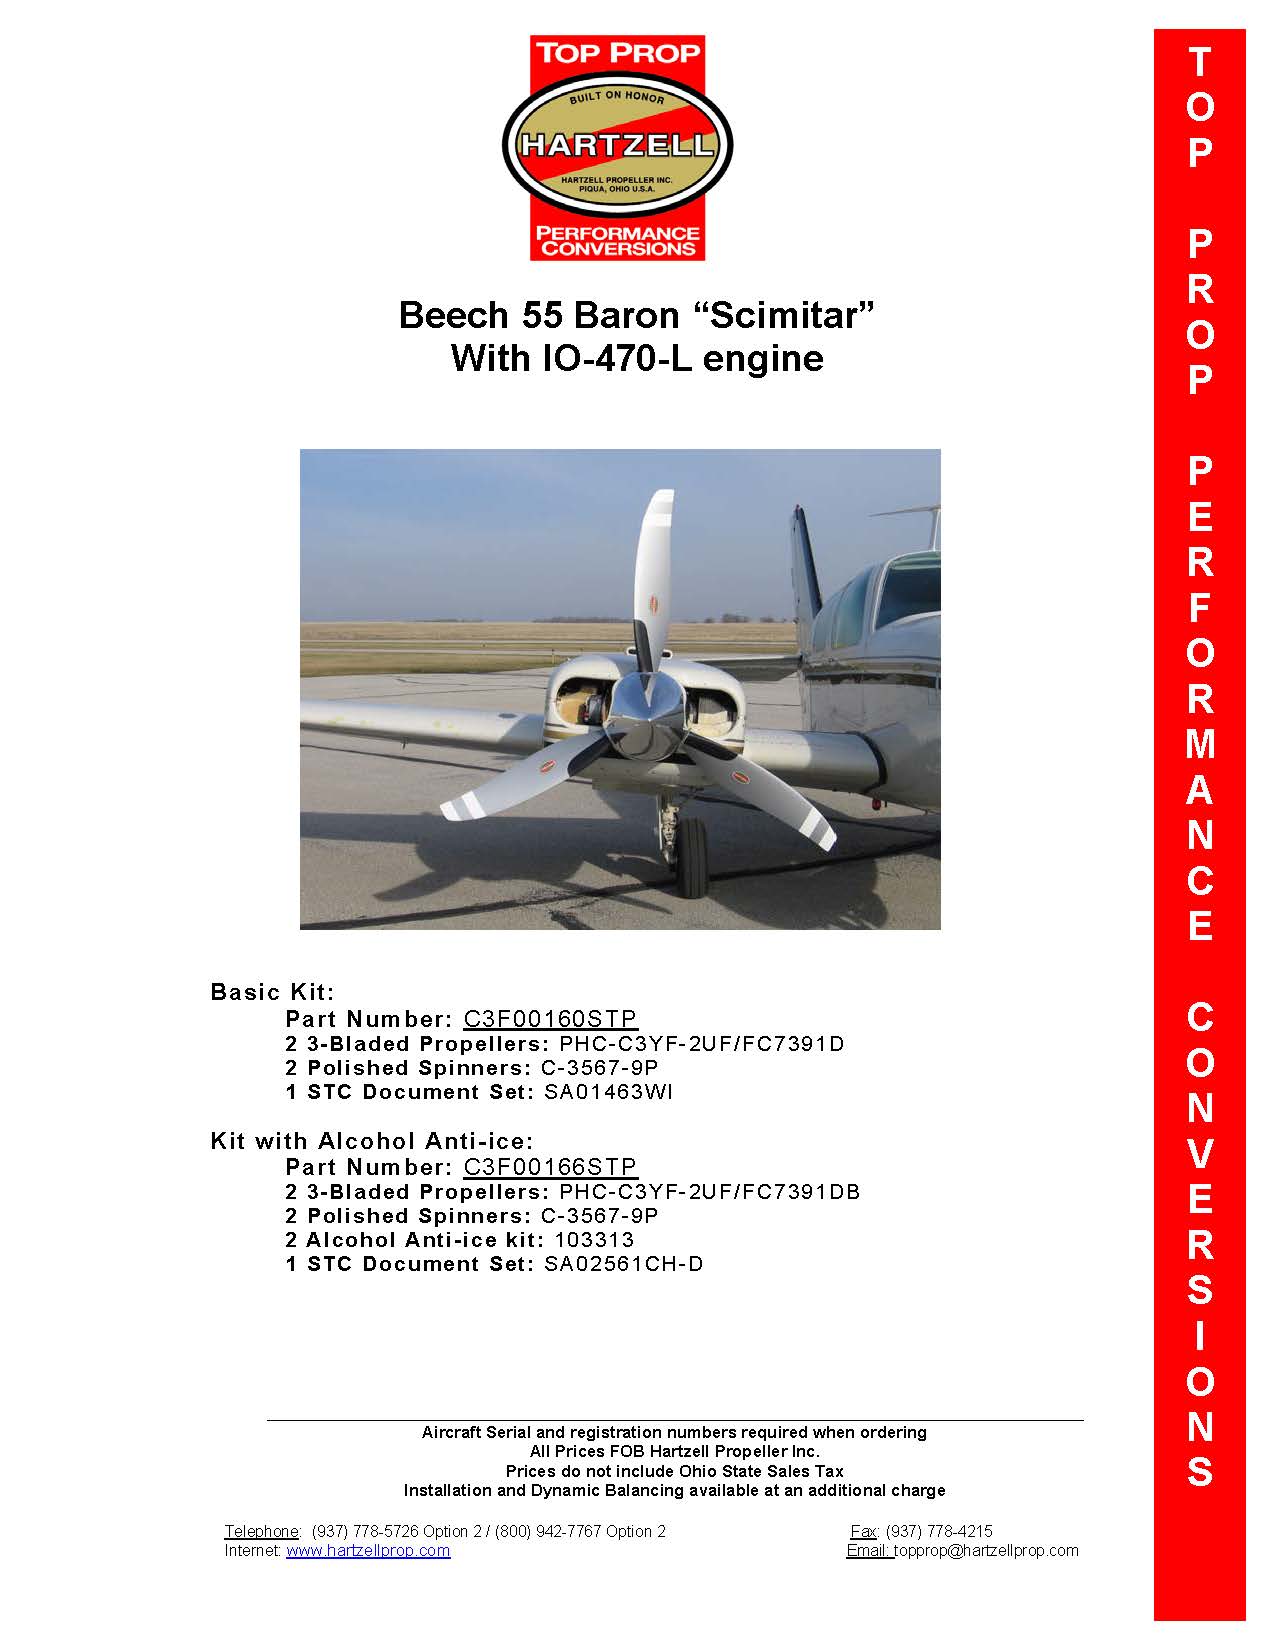 BEECH-55-BARON-IO-470-L-Scimitar-C3F00160STP-PAGE-1